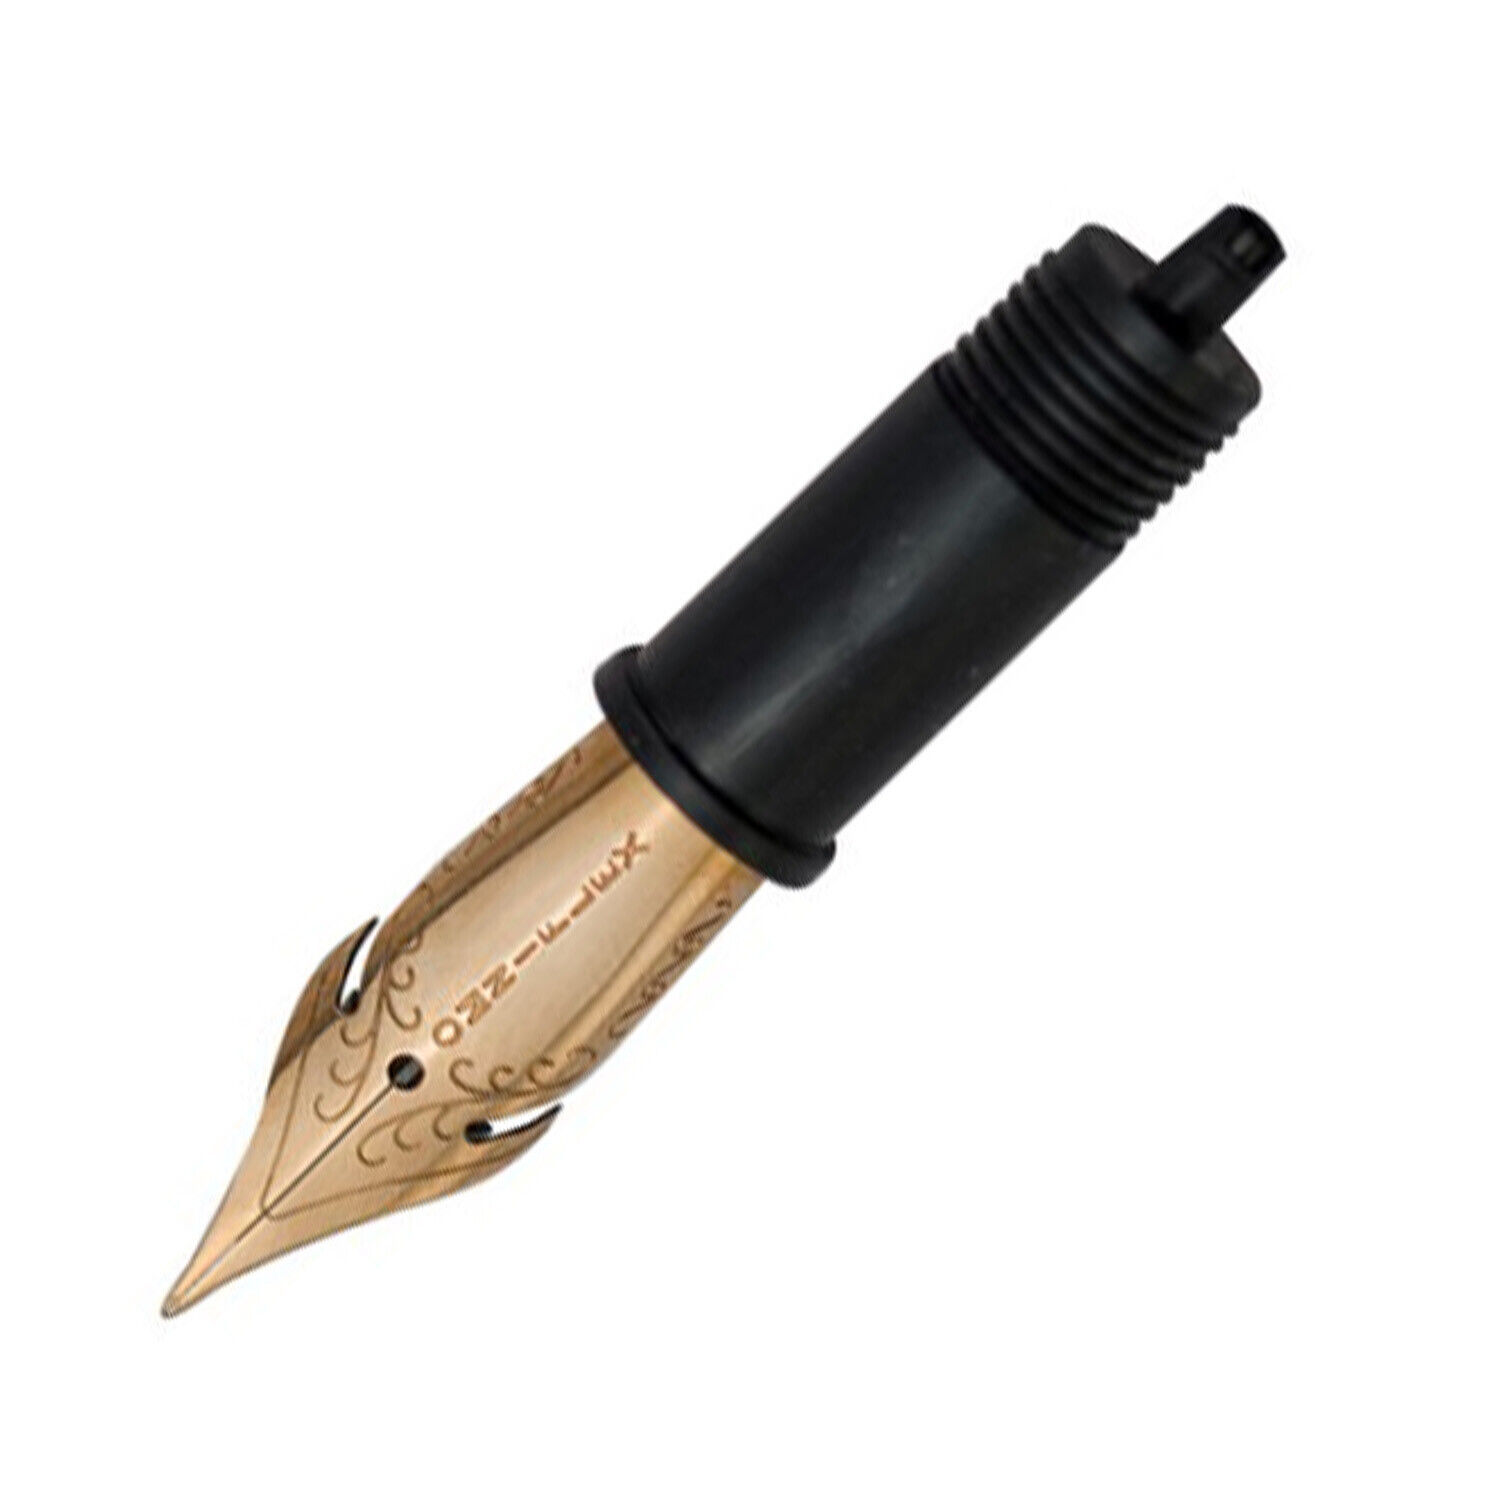 Conklin Fountain Pen Nib in Stainless Steel Rose Gold #6 Omniflex Nib - NEW